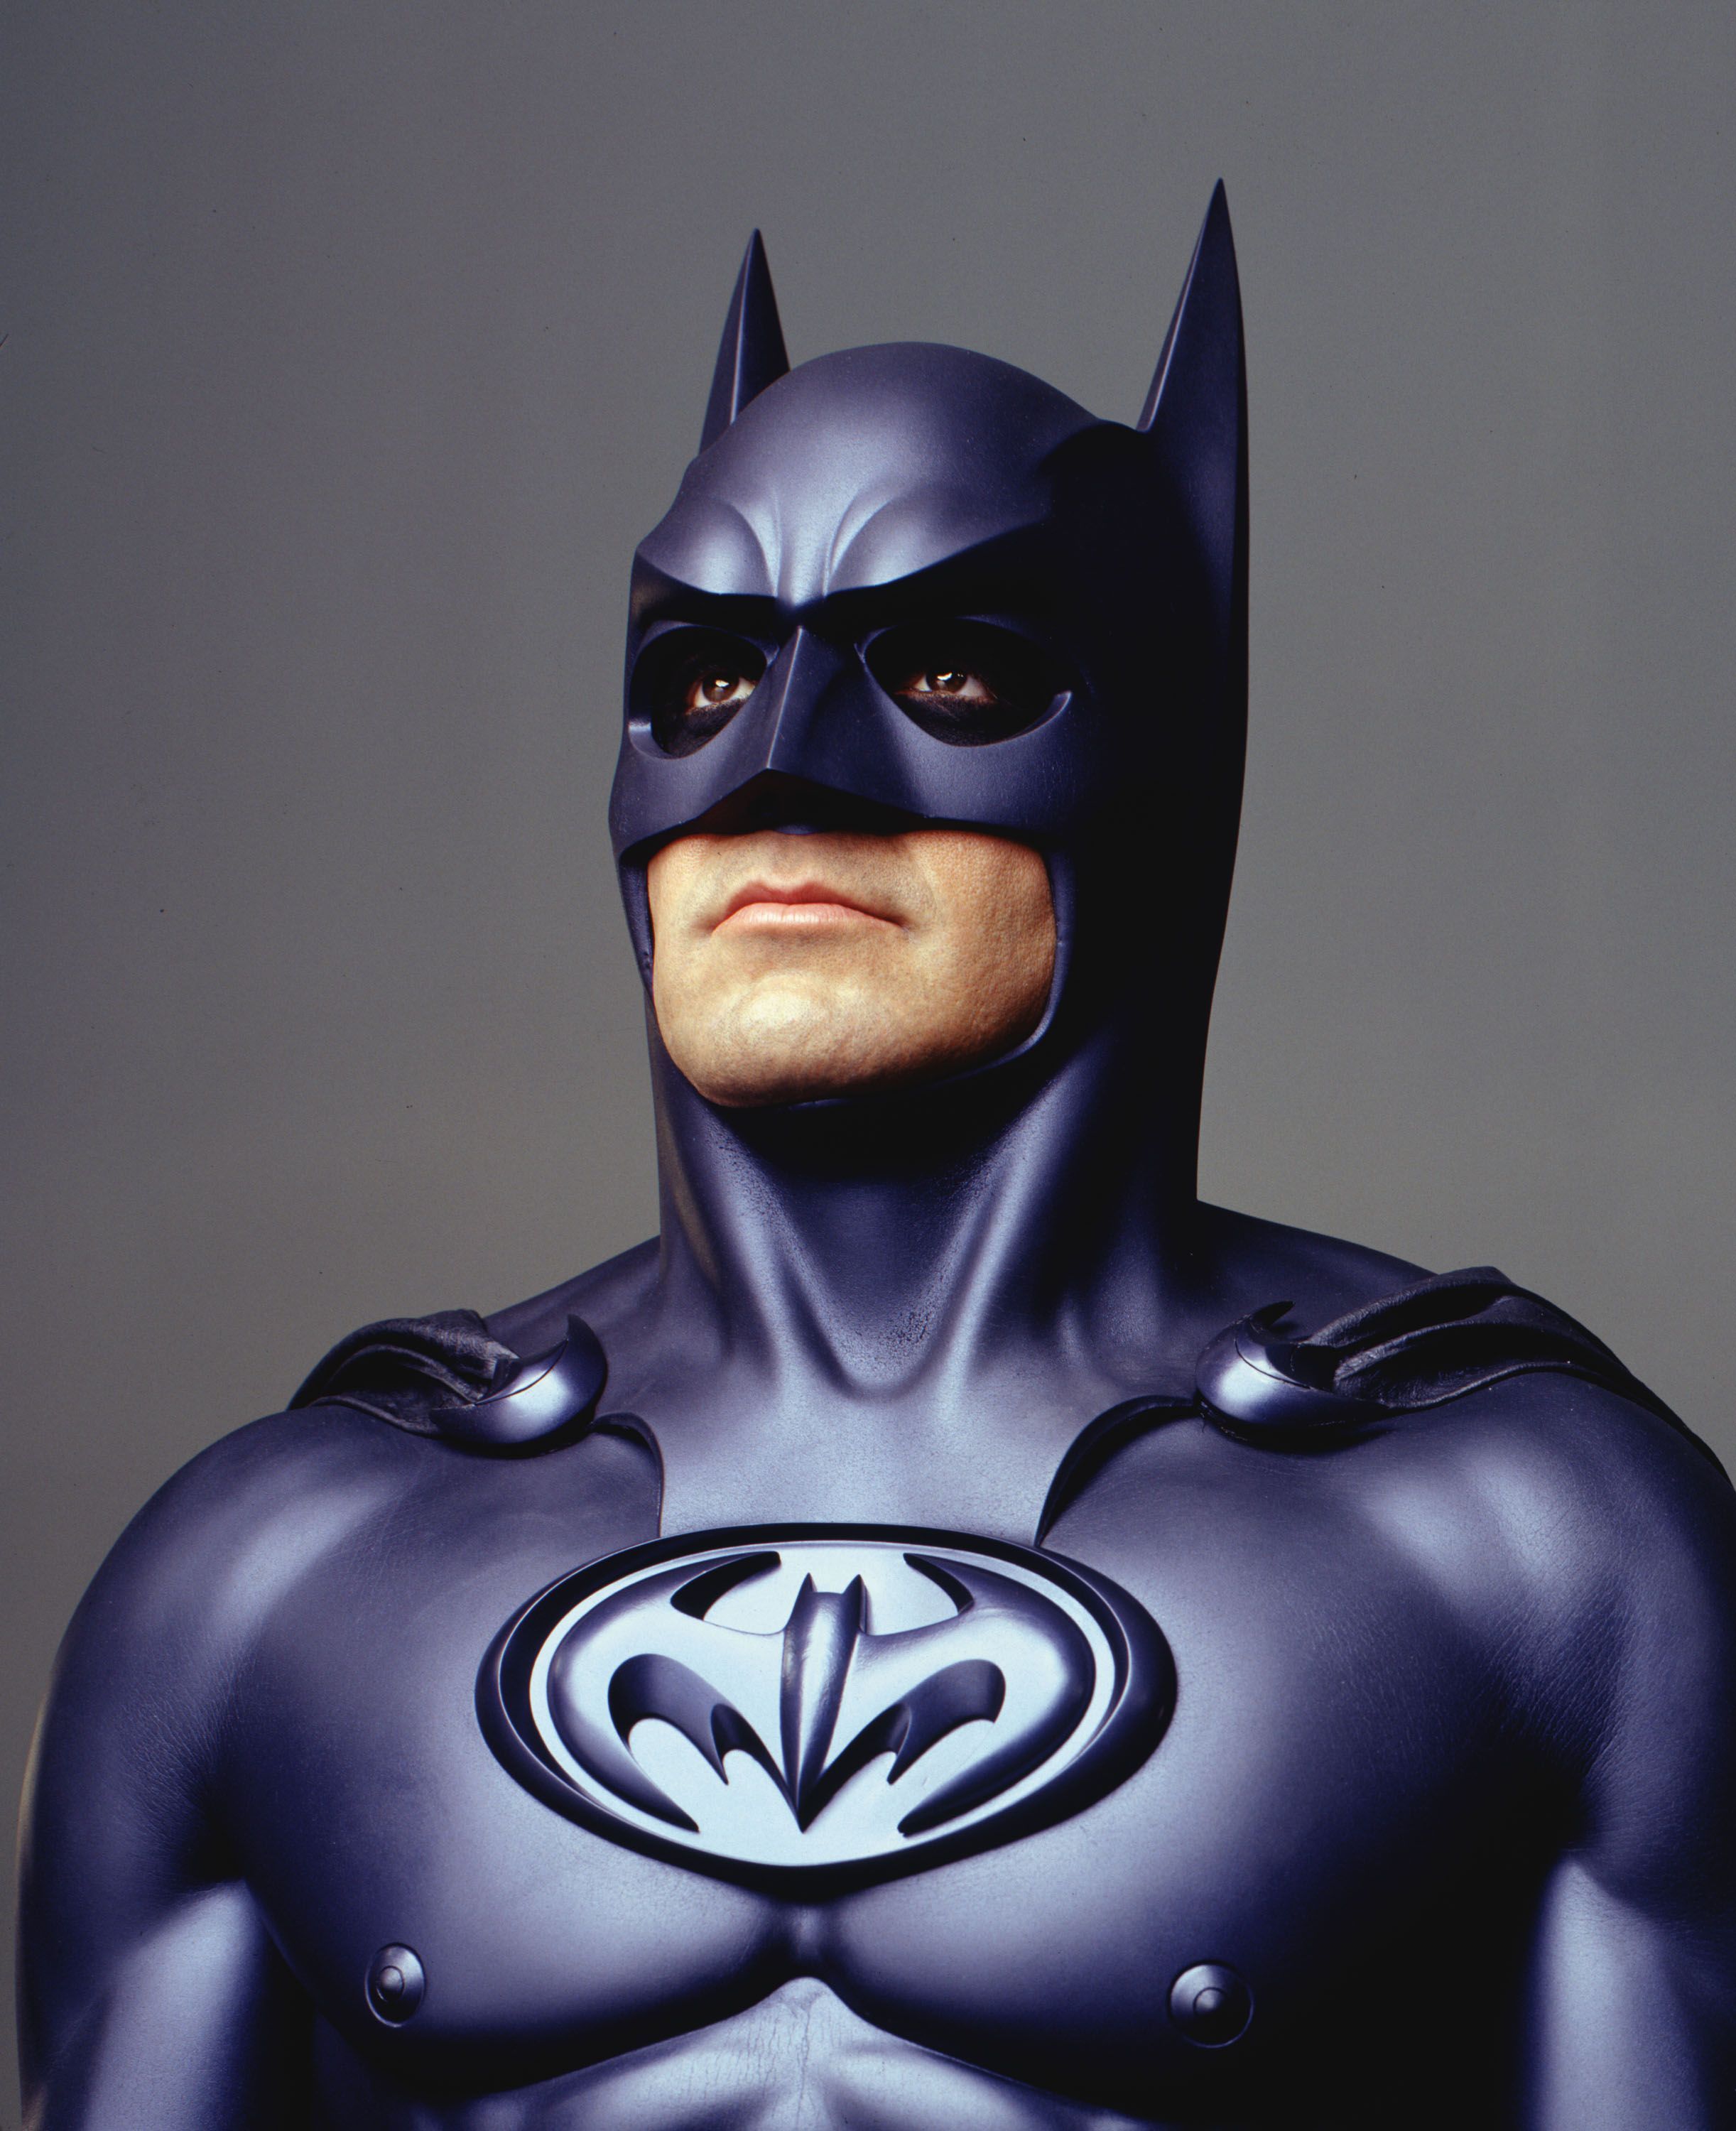 George Clooney warned Ben Affleck against playing Batman